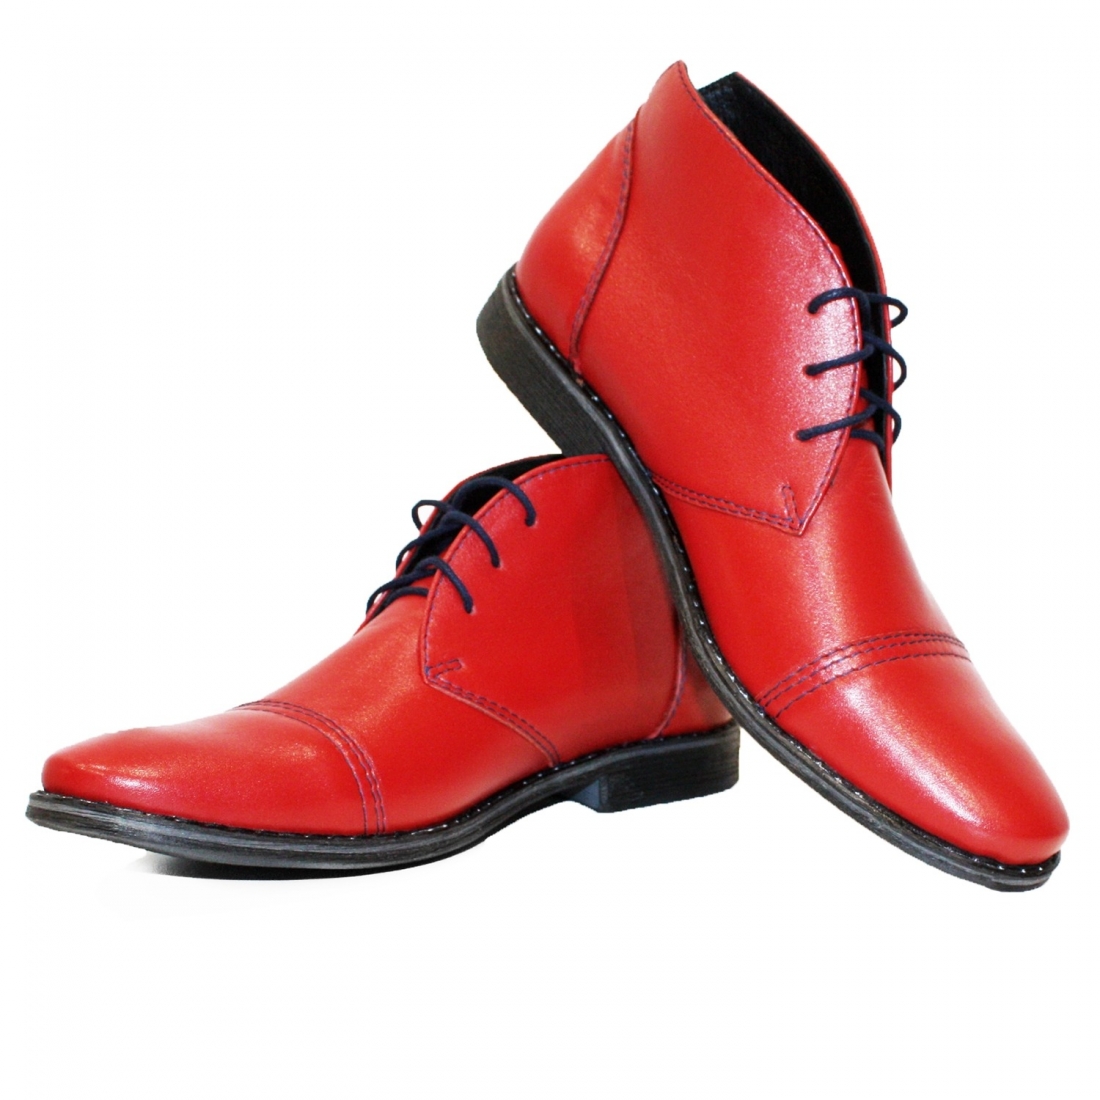 Modello Vurello - чукка мужские - Handmade Colorful Italian Leather Shoes